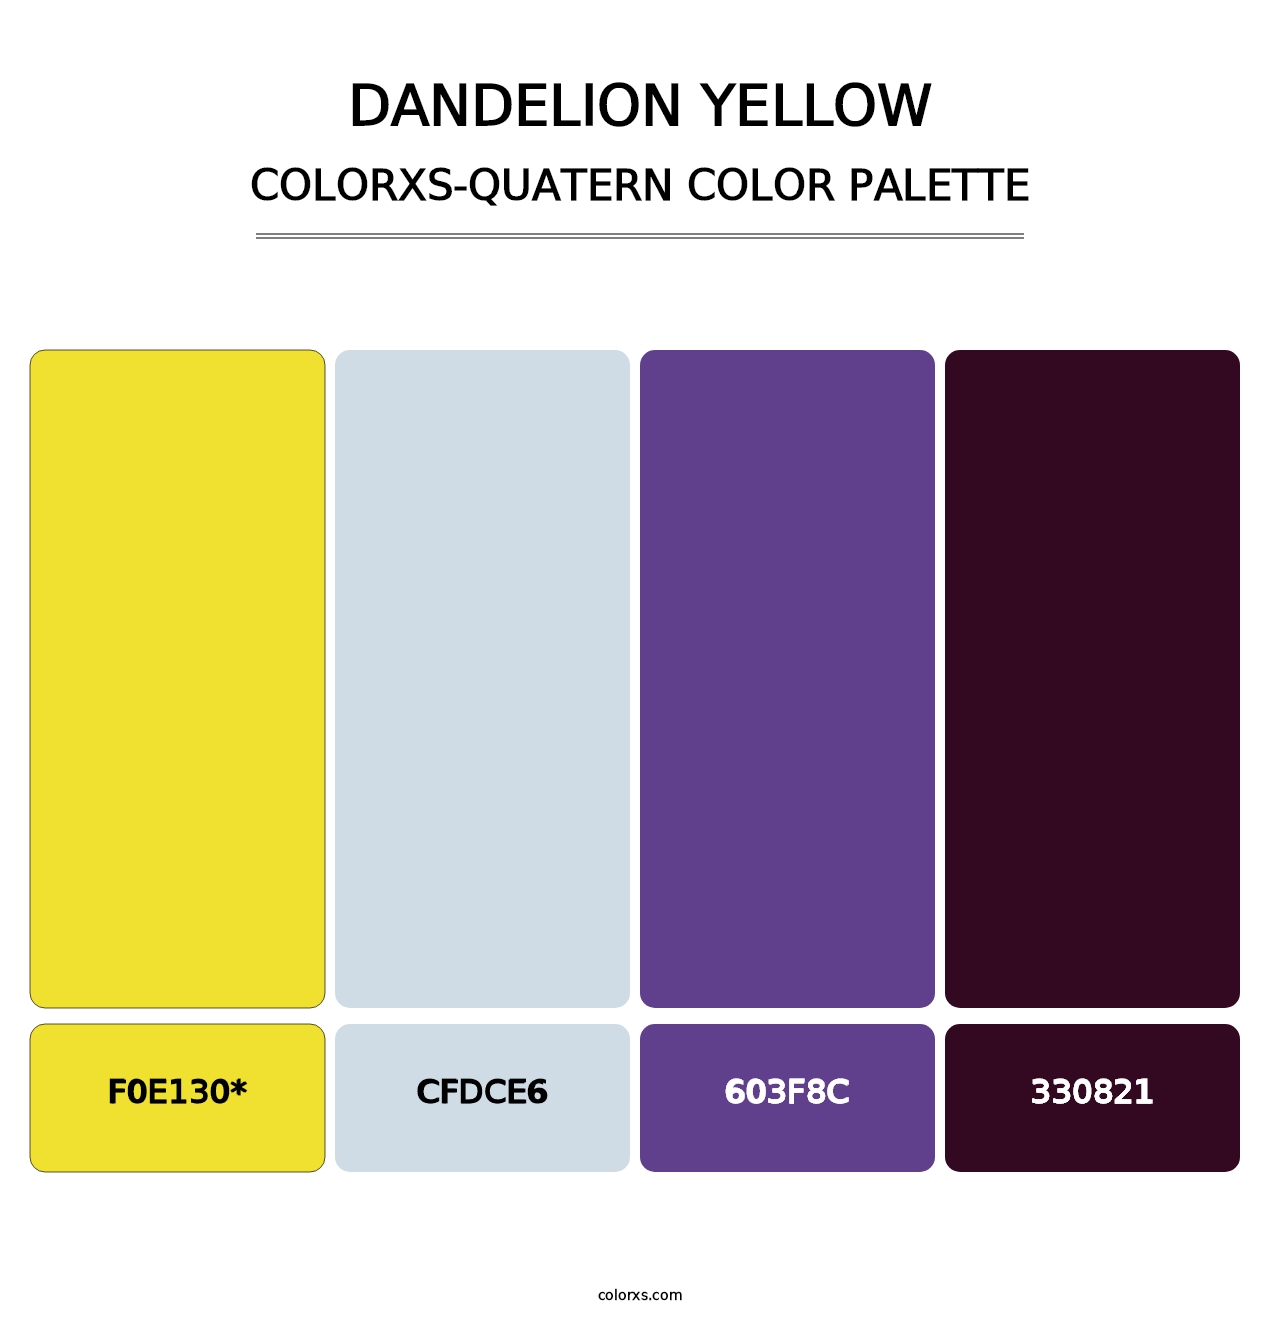 Dandelion Yellow - Colorxs Quatern Palette